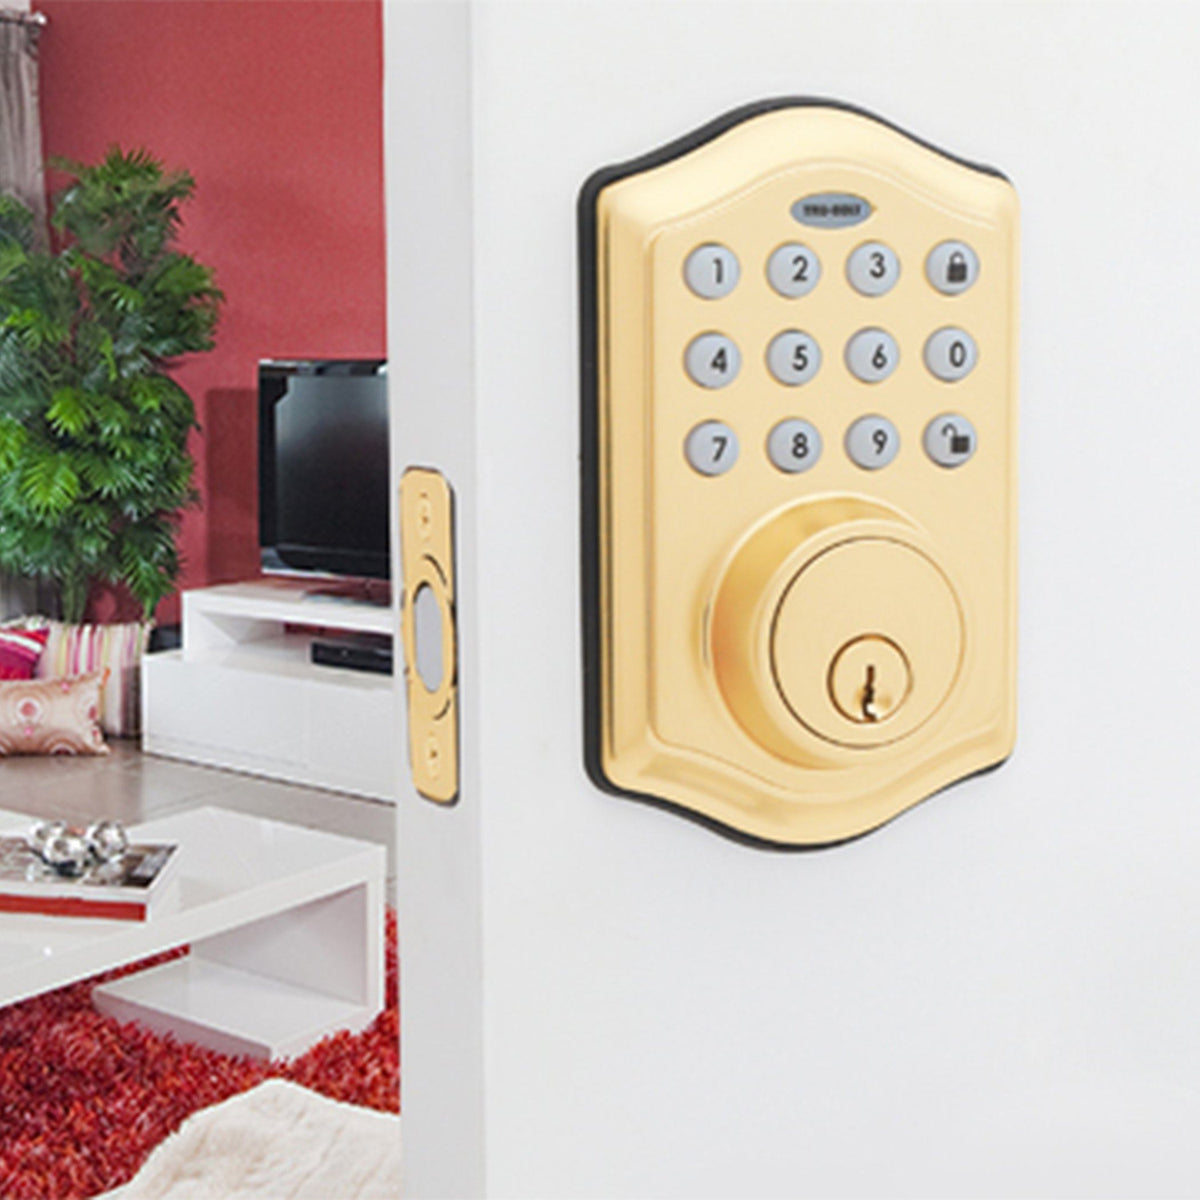 Honeywell 8712009 Electronic Deadbolt Door Lock with Keypad in Polished Brass Installed on Door